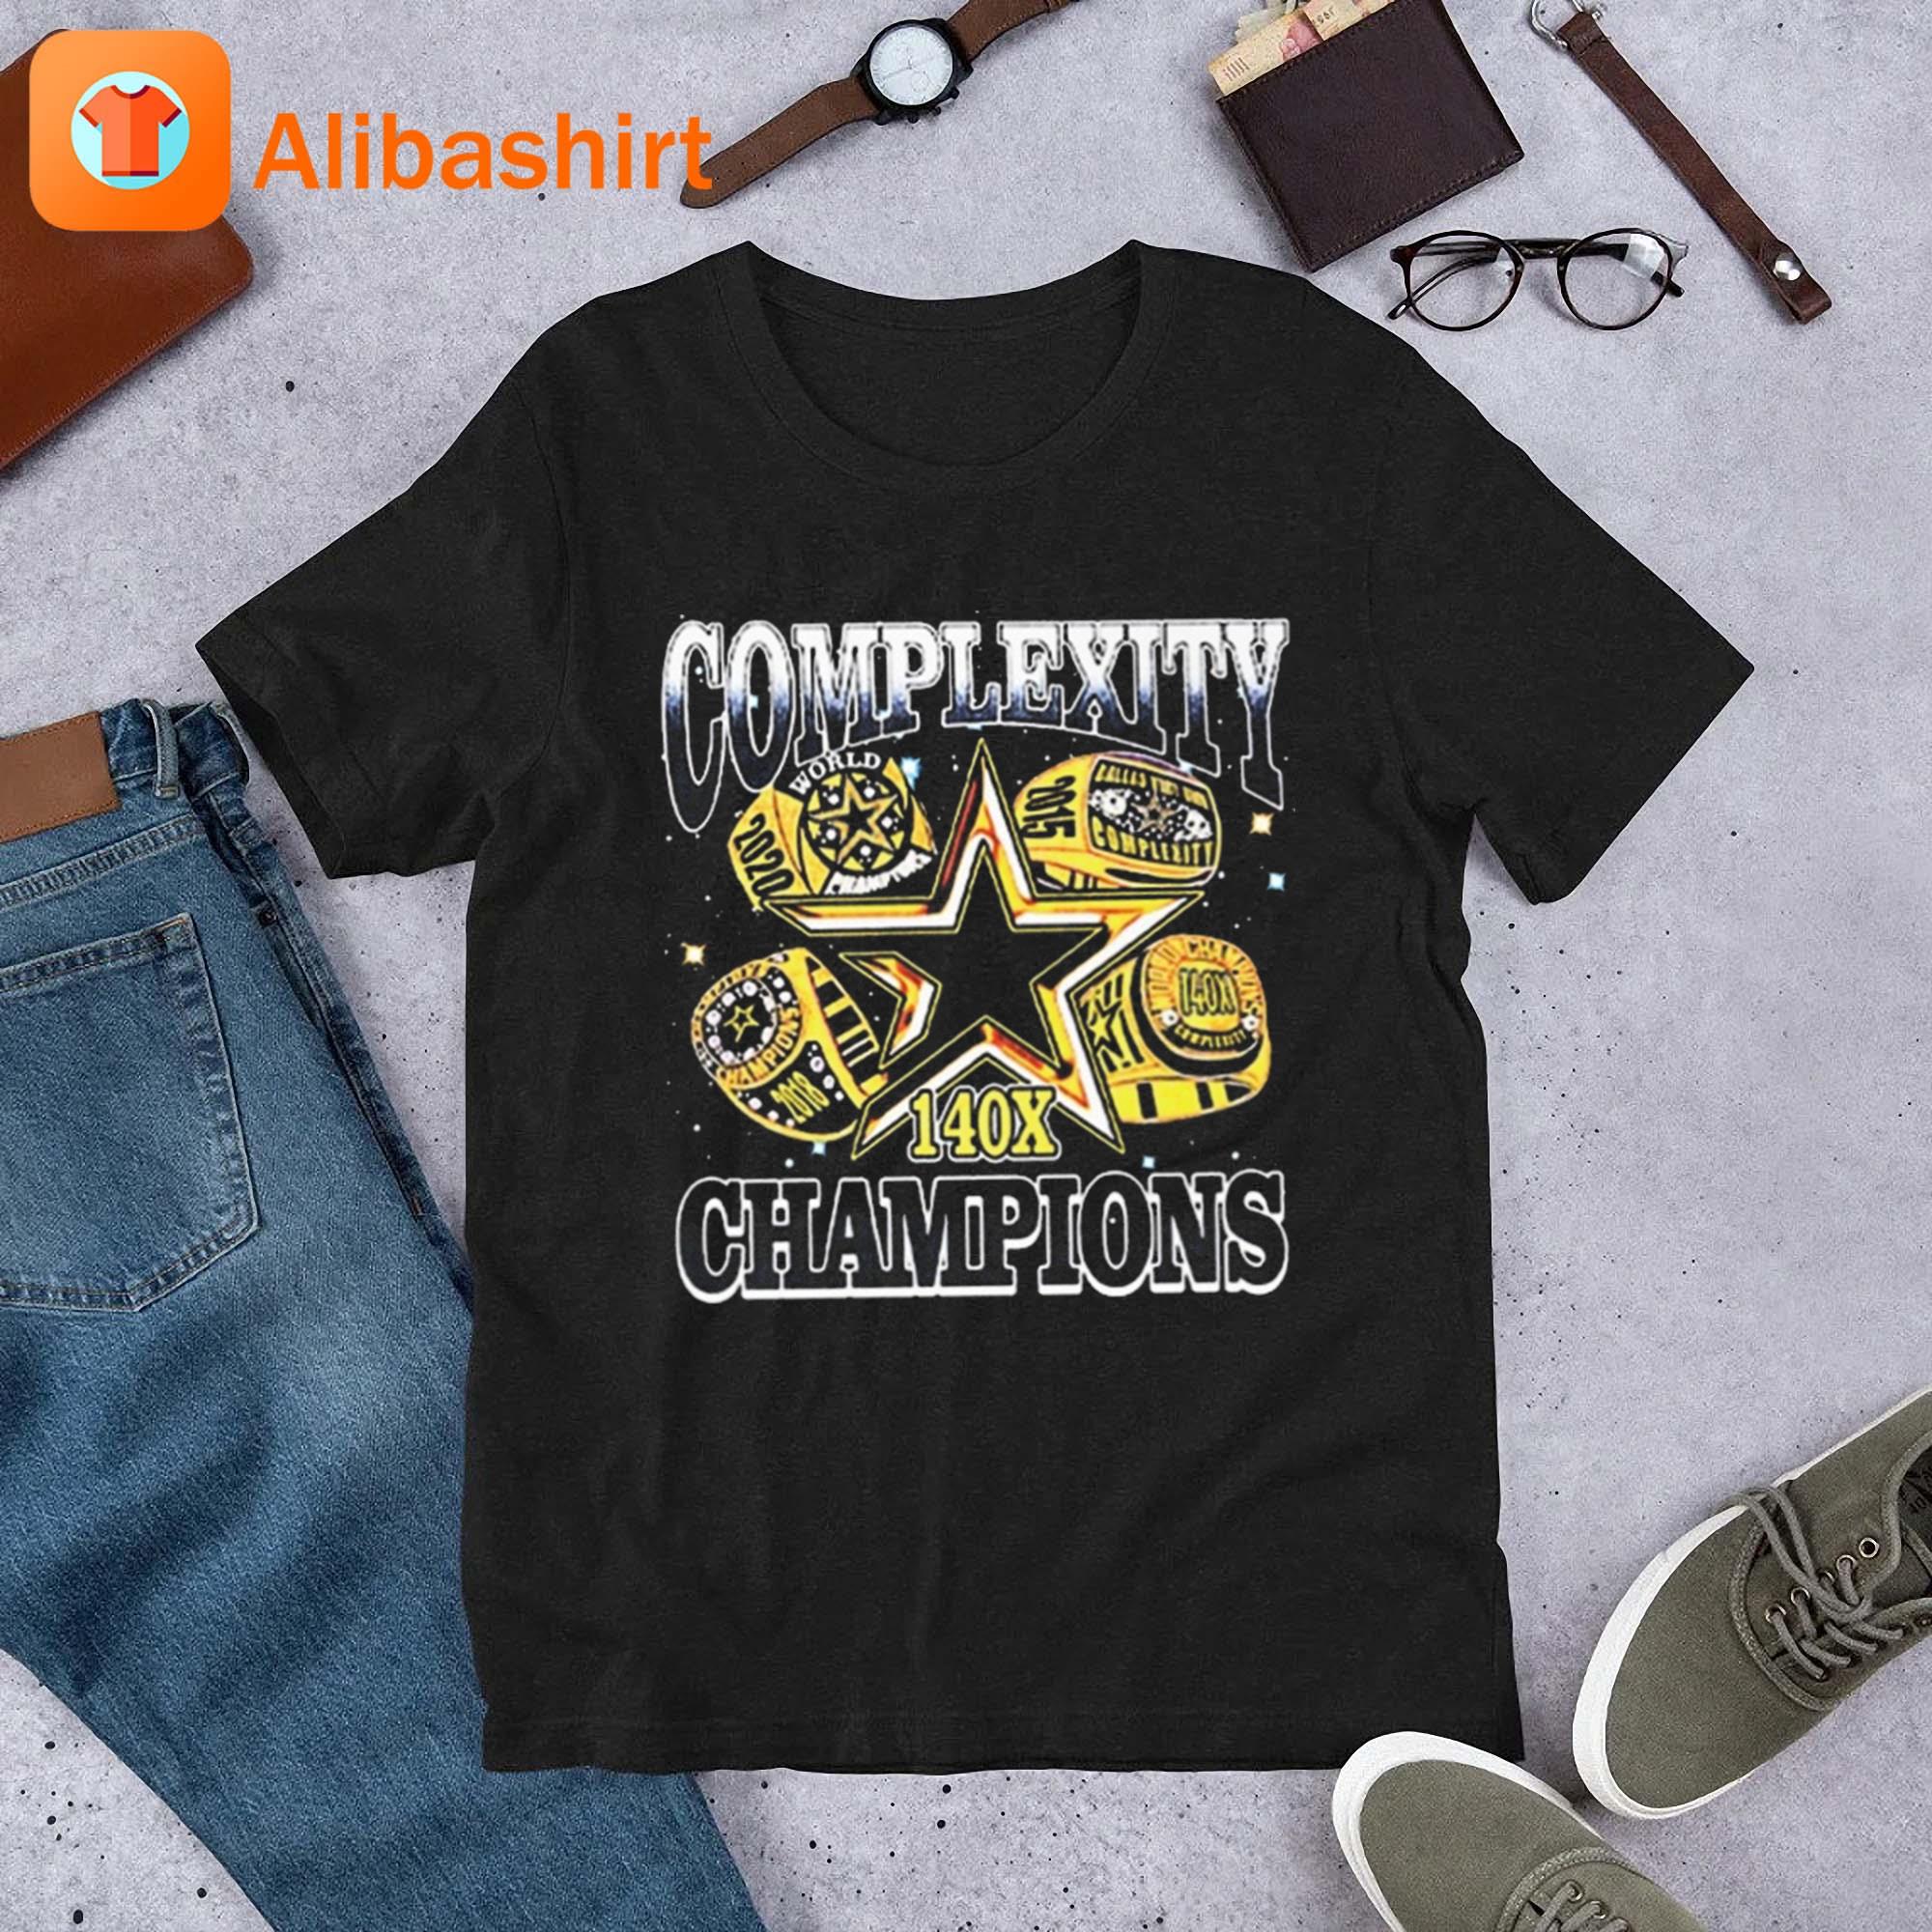 Complexity Timthetatman 140x Champions Shirt